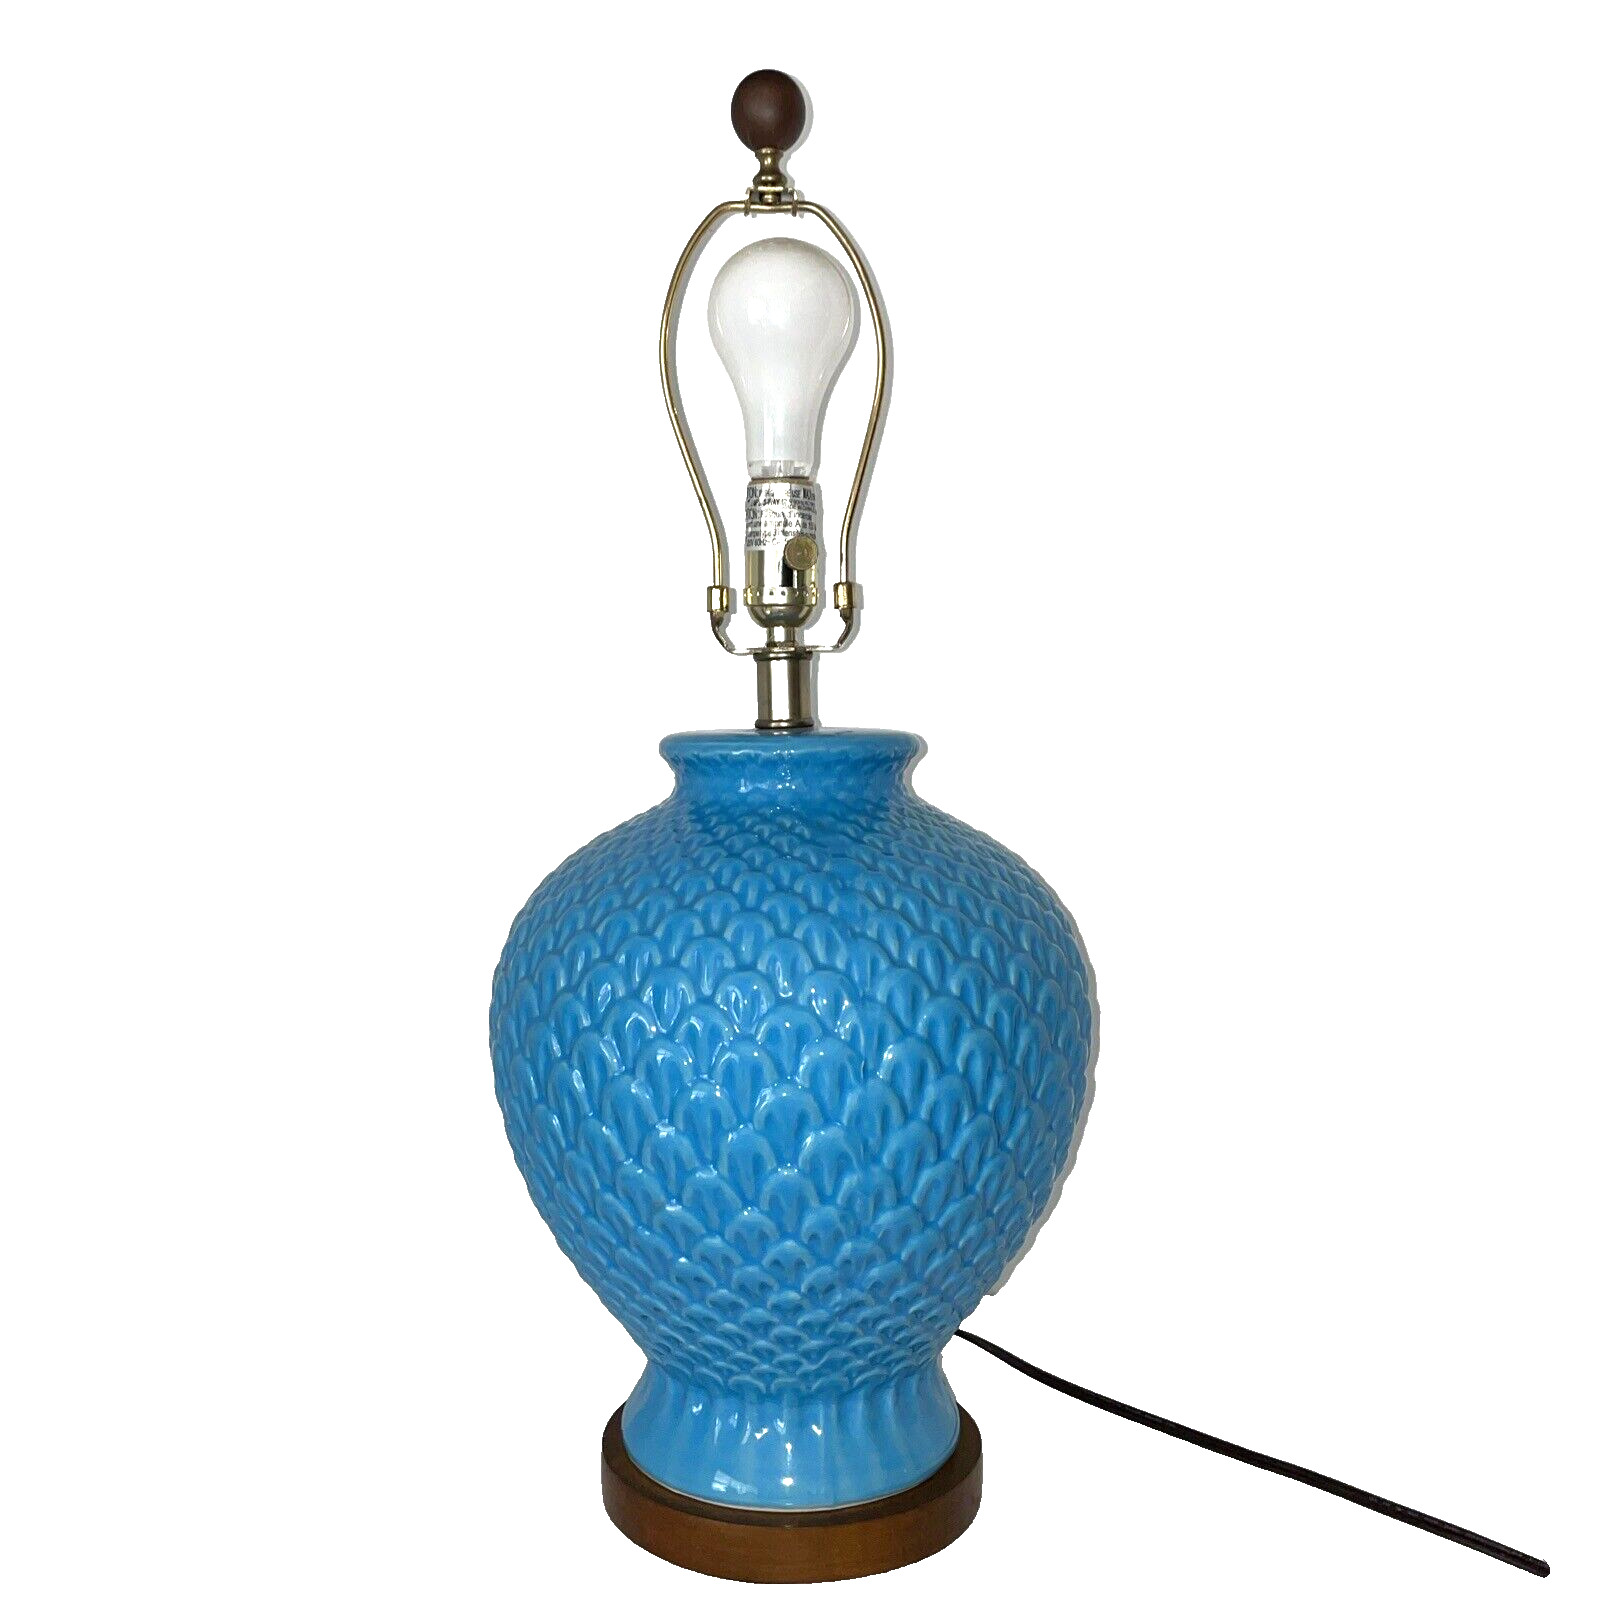 Vintage Ralph Lauren Pineapple Table Lamp Blue w/Wood Base no Shade